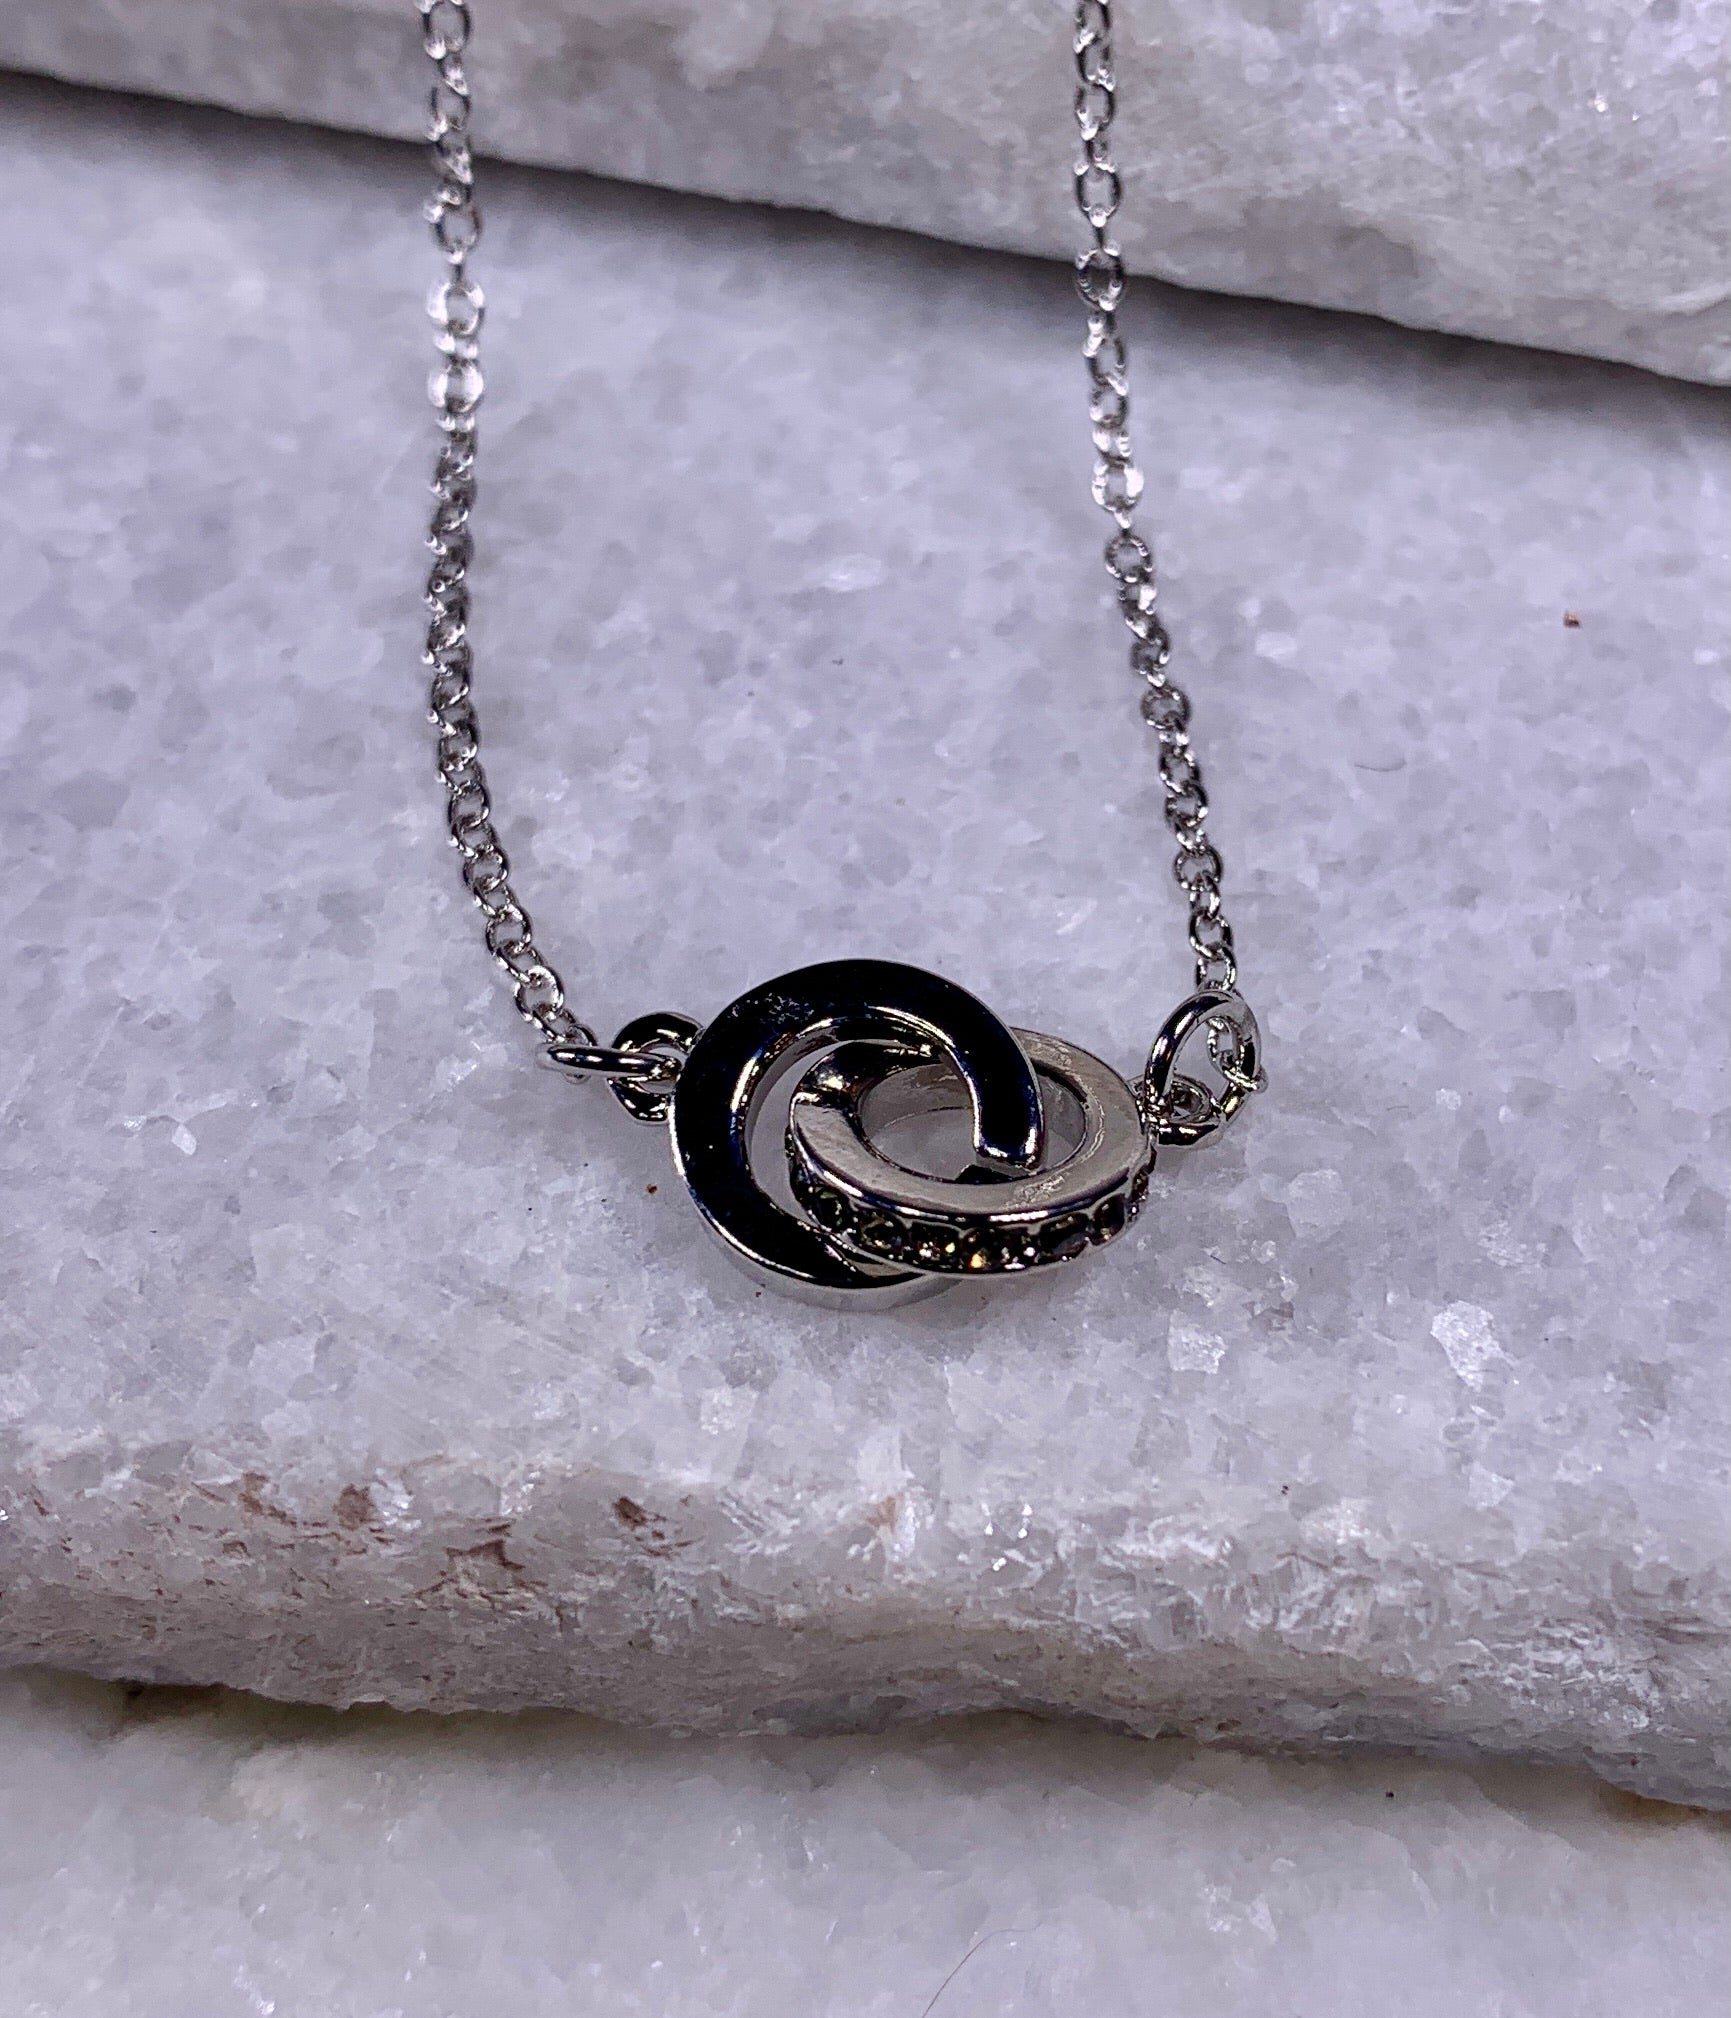 Silver Interlocking Rings Necklace.